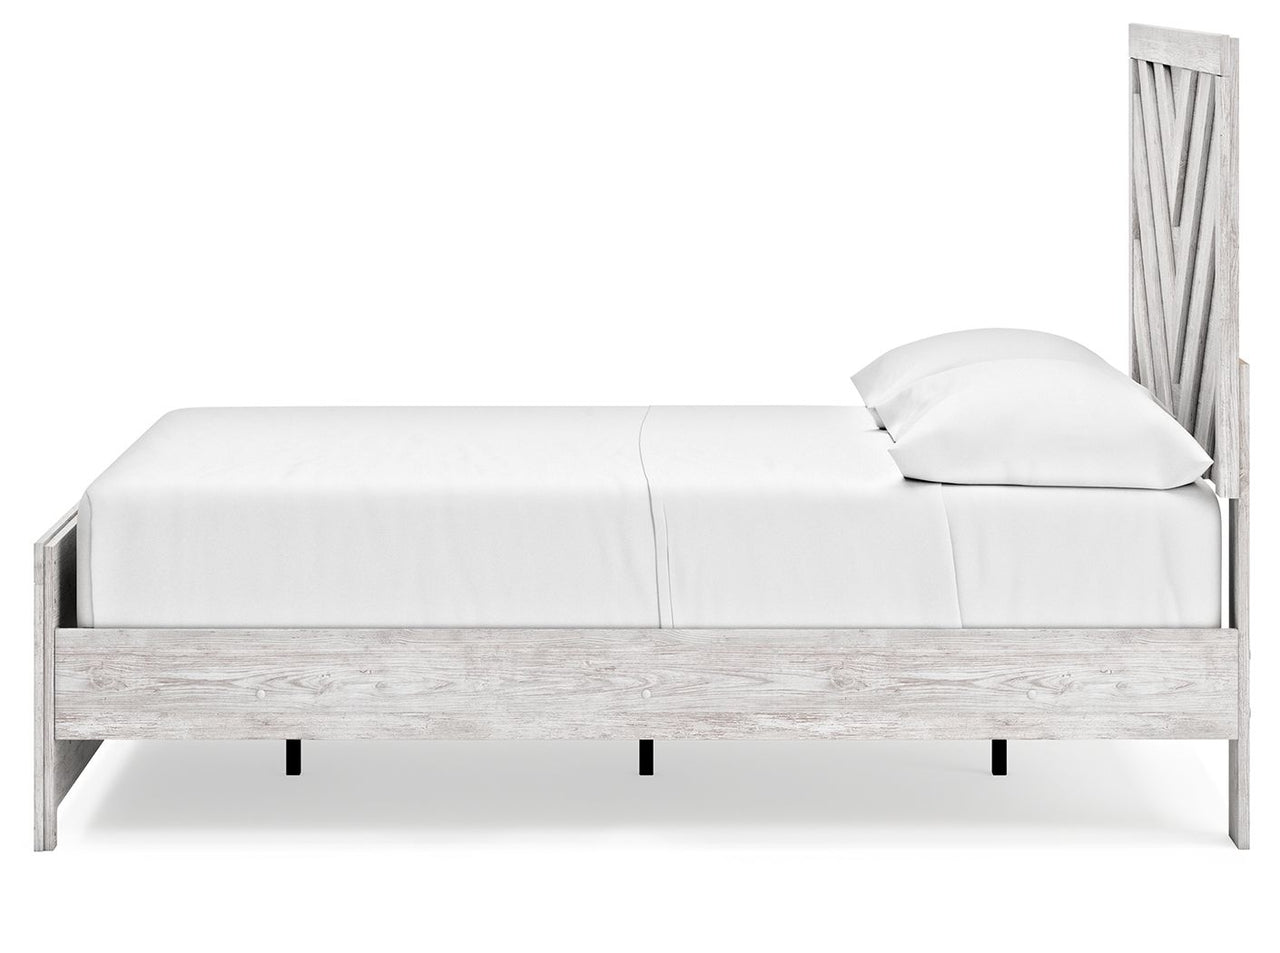 Cayboni - Panel Bed - Tony's Home Furnishings